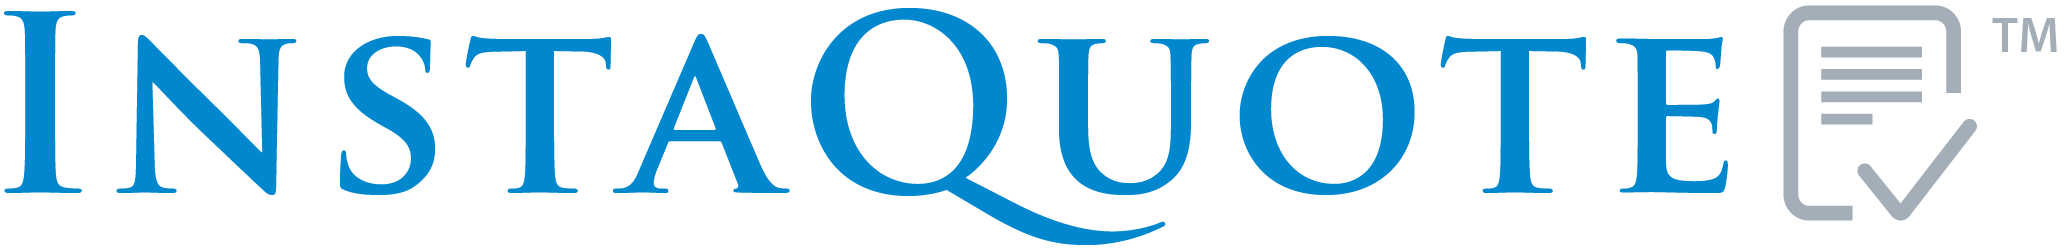 instaquote logo